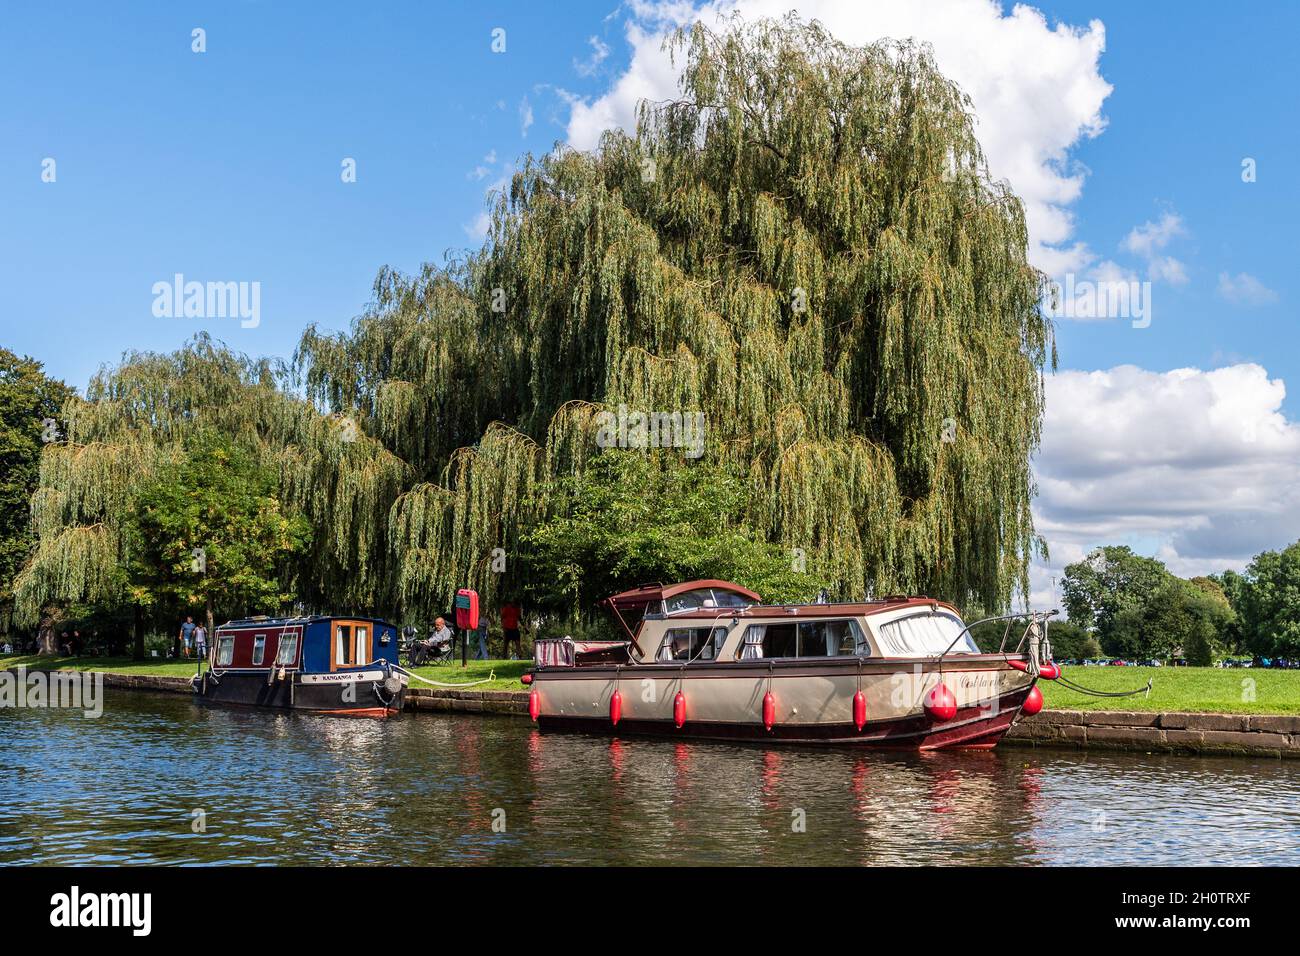 Boats moored on the River Avon, Stratford-upon-Avon, Warwickshire, UK. Stock Photo